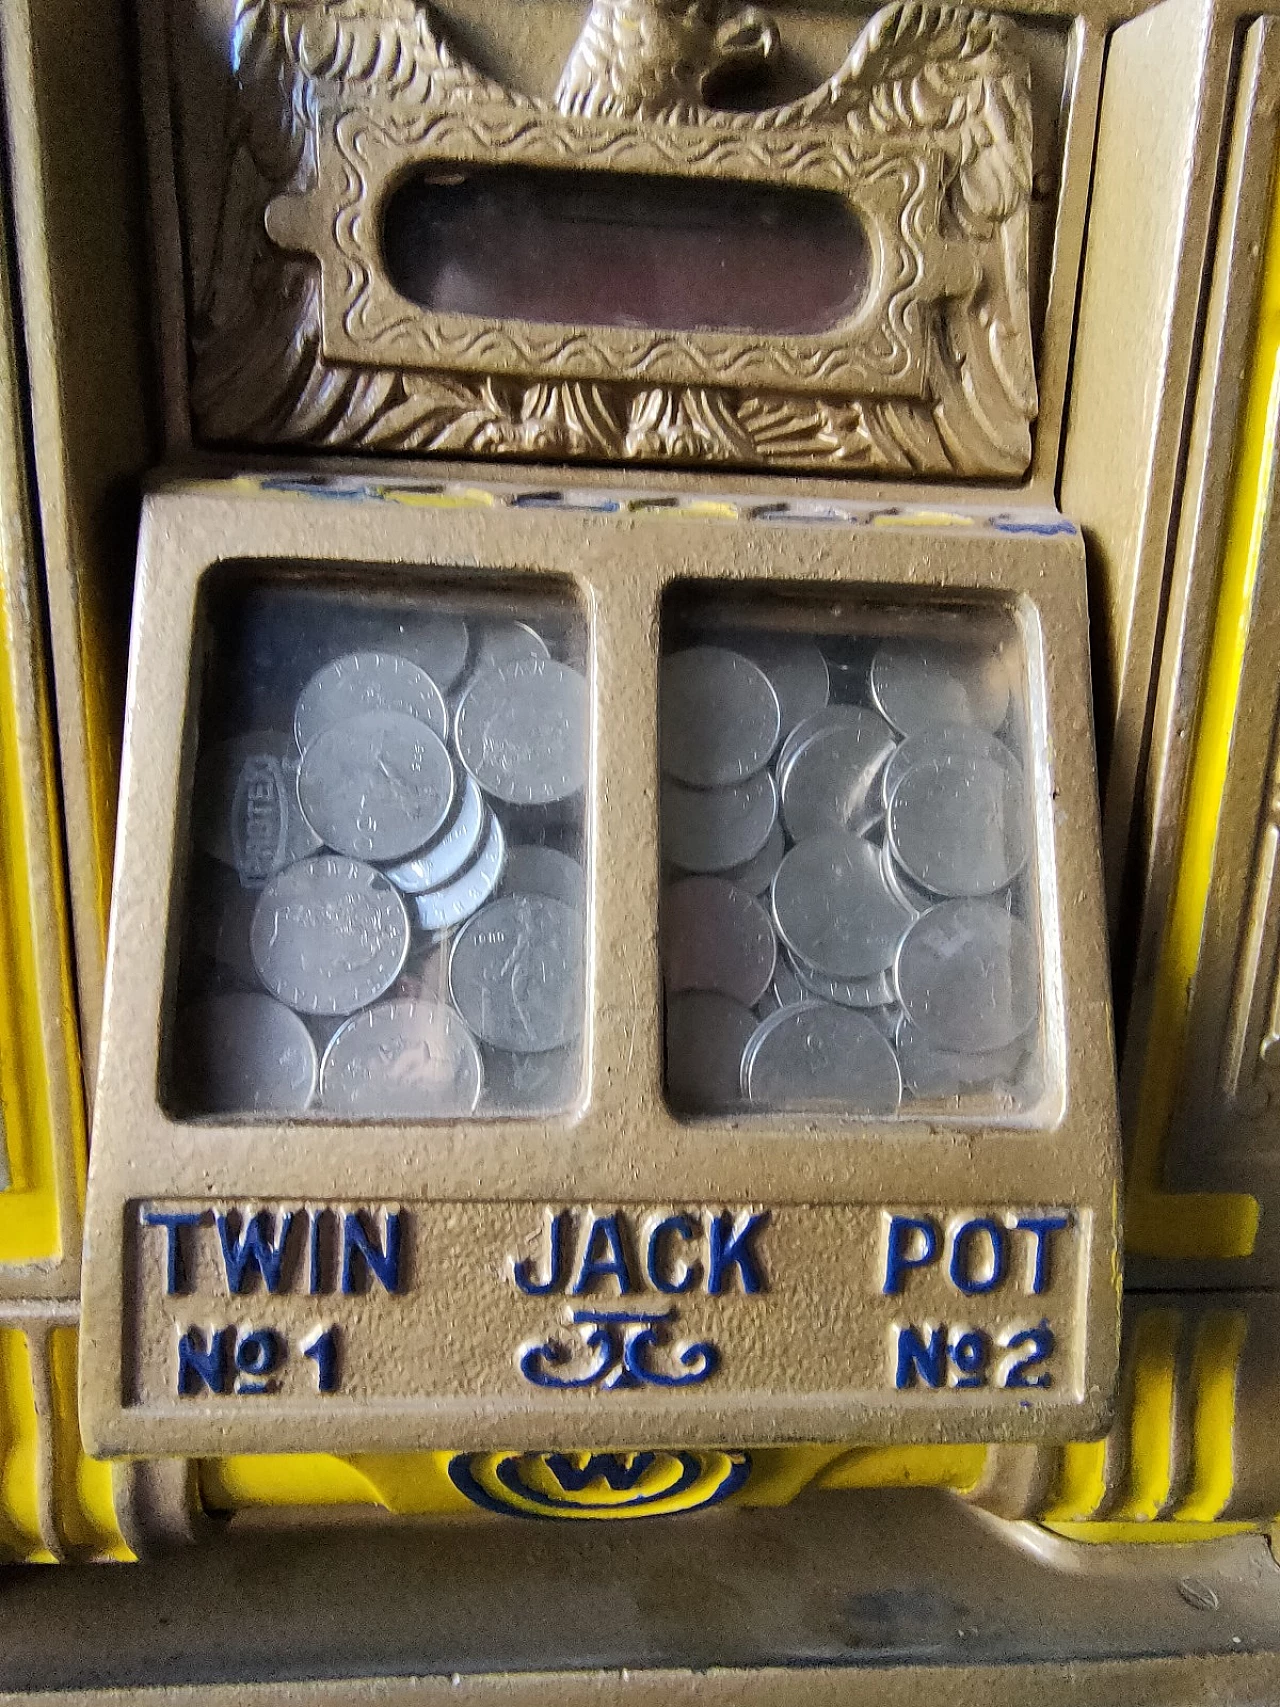 Watling Rol A Top 25 cent slot machines, 1930s 11